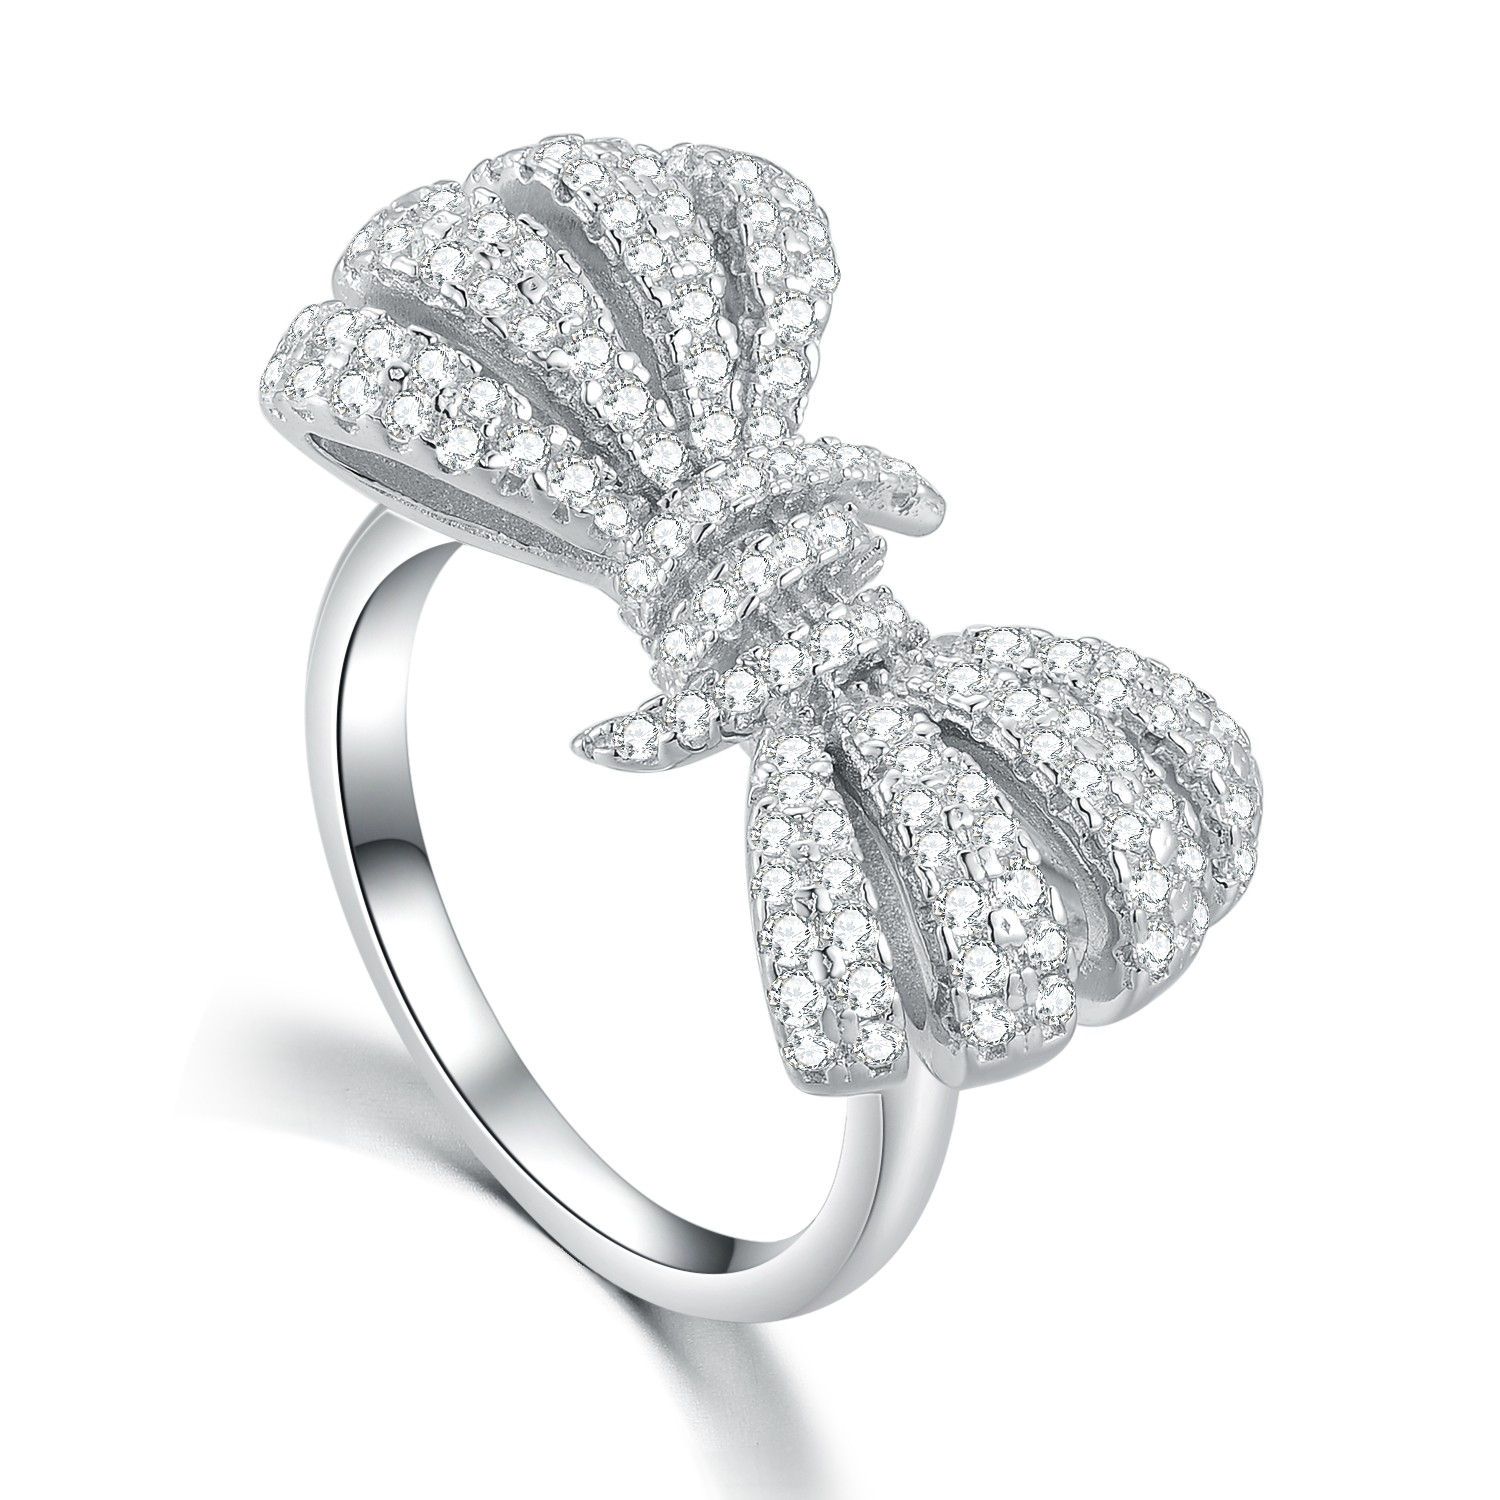 Jewelry Art: Silver Bow Knot Ring, Beautiful Handmade Jewelry Artwork